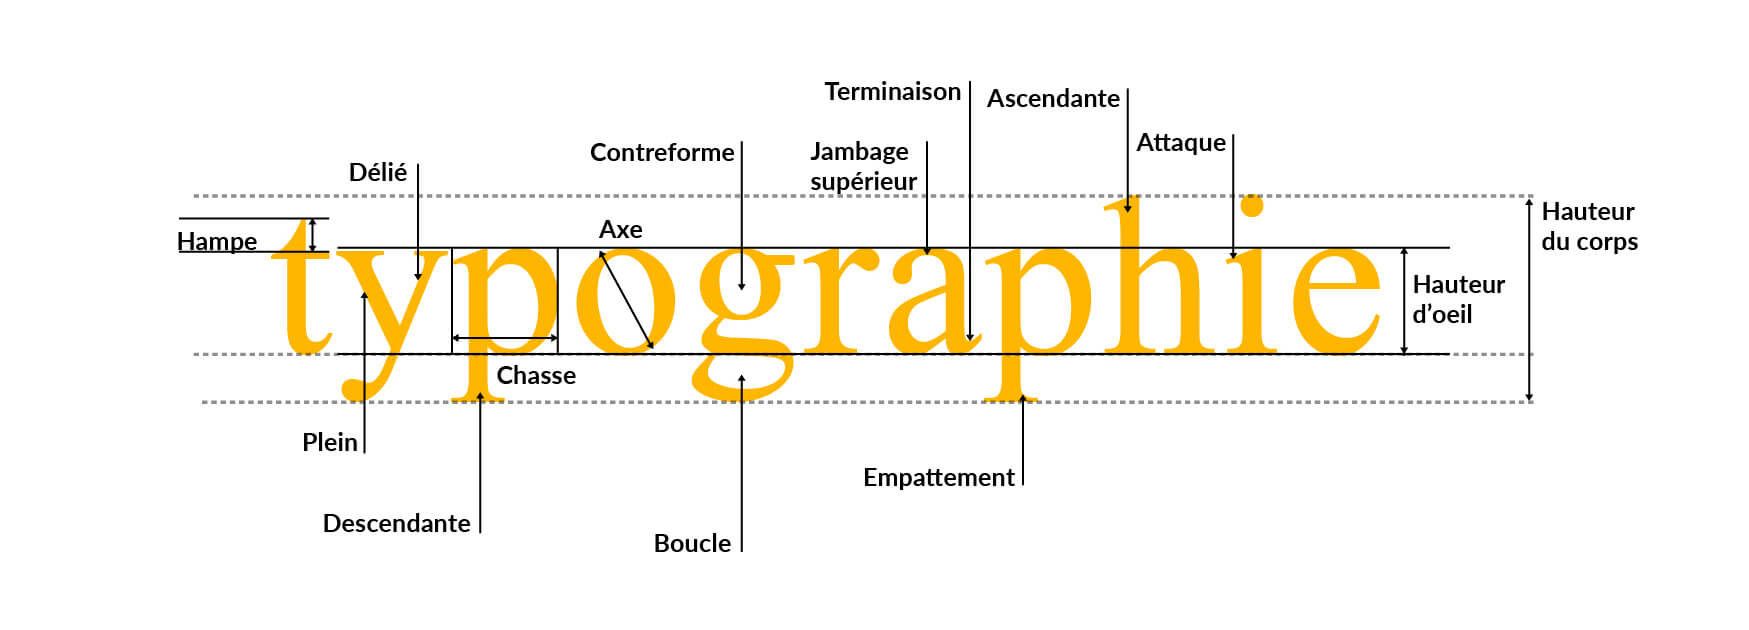 Anatomie des lettres en typographie